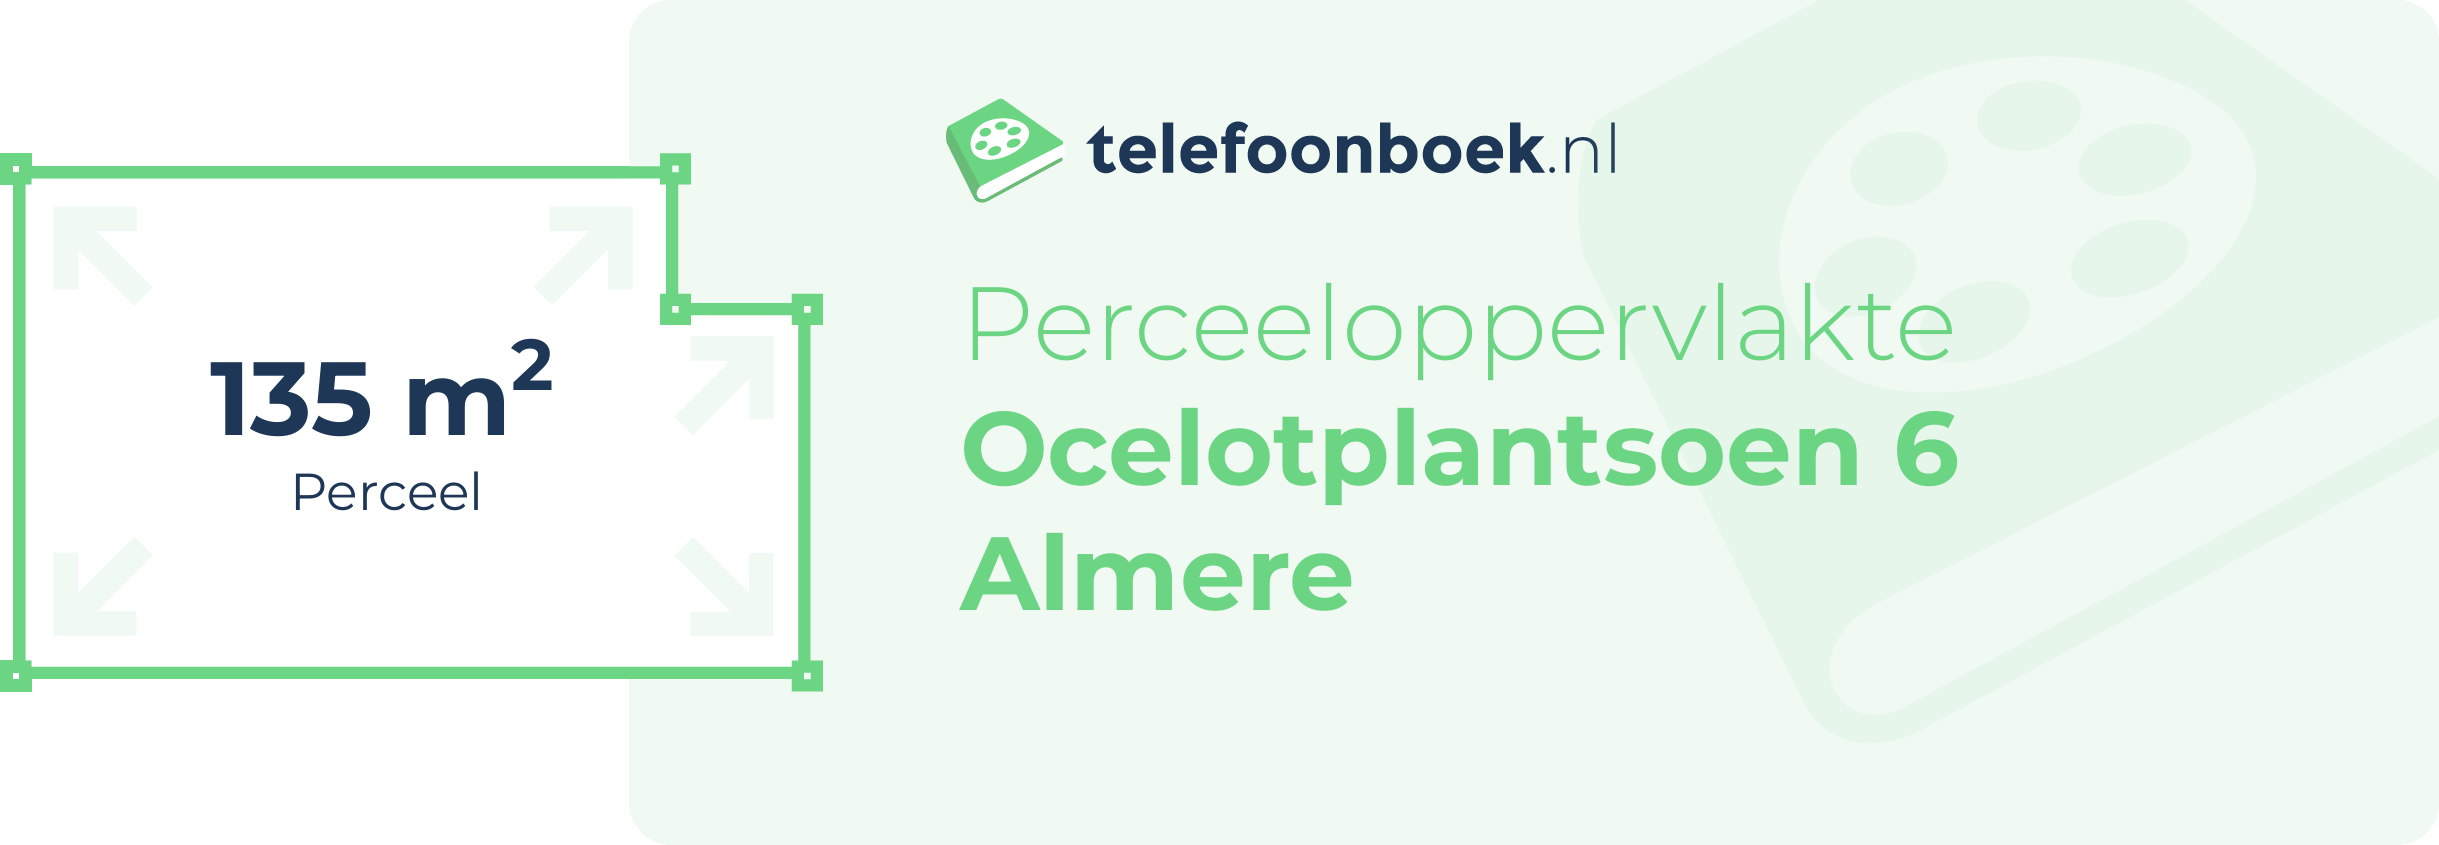 Perceeloppervlakte Ocelotplantsoen 6 Almere